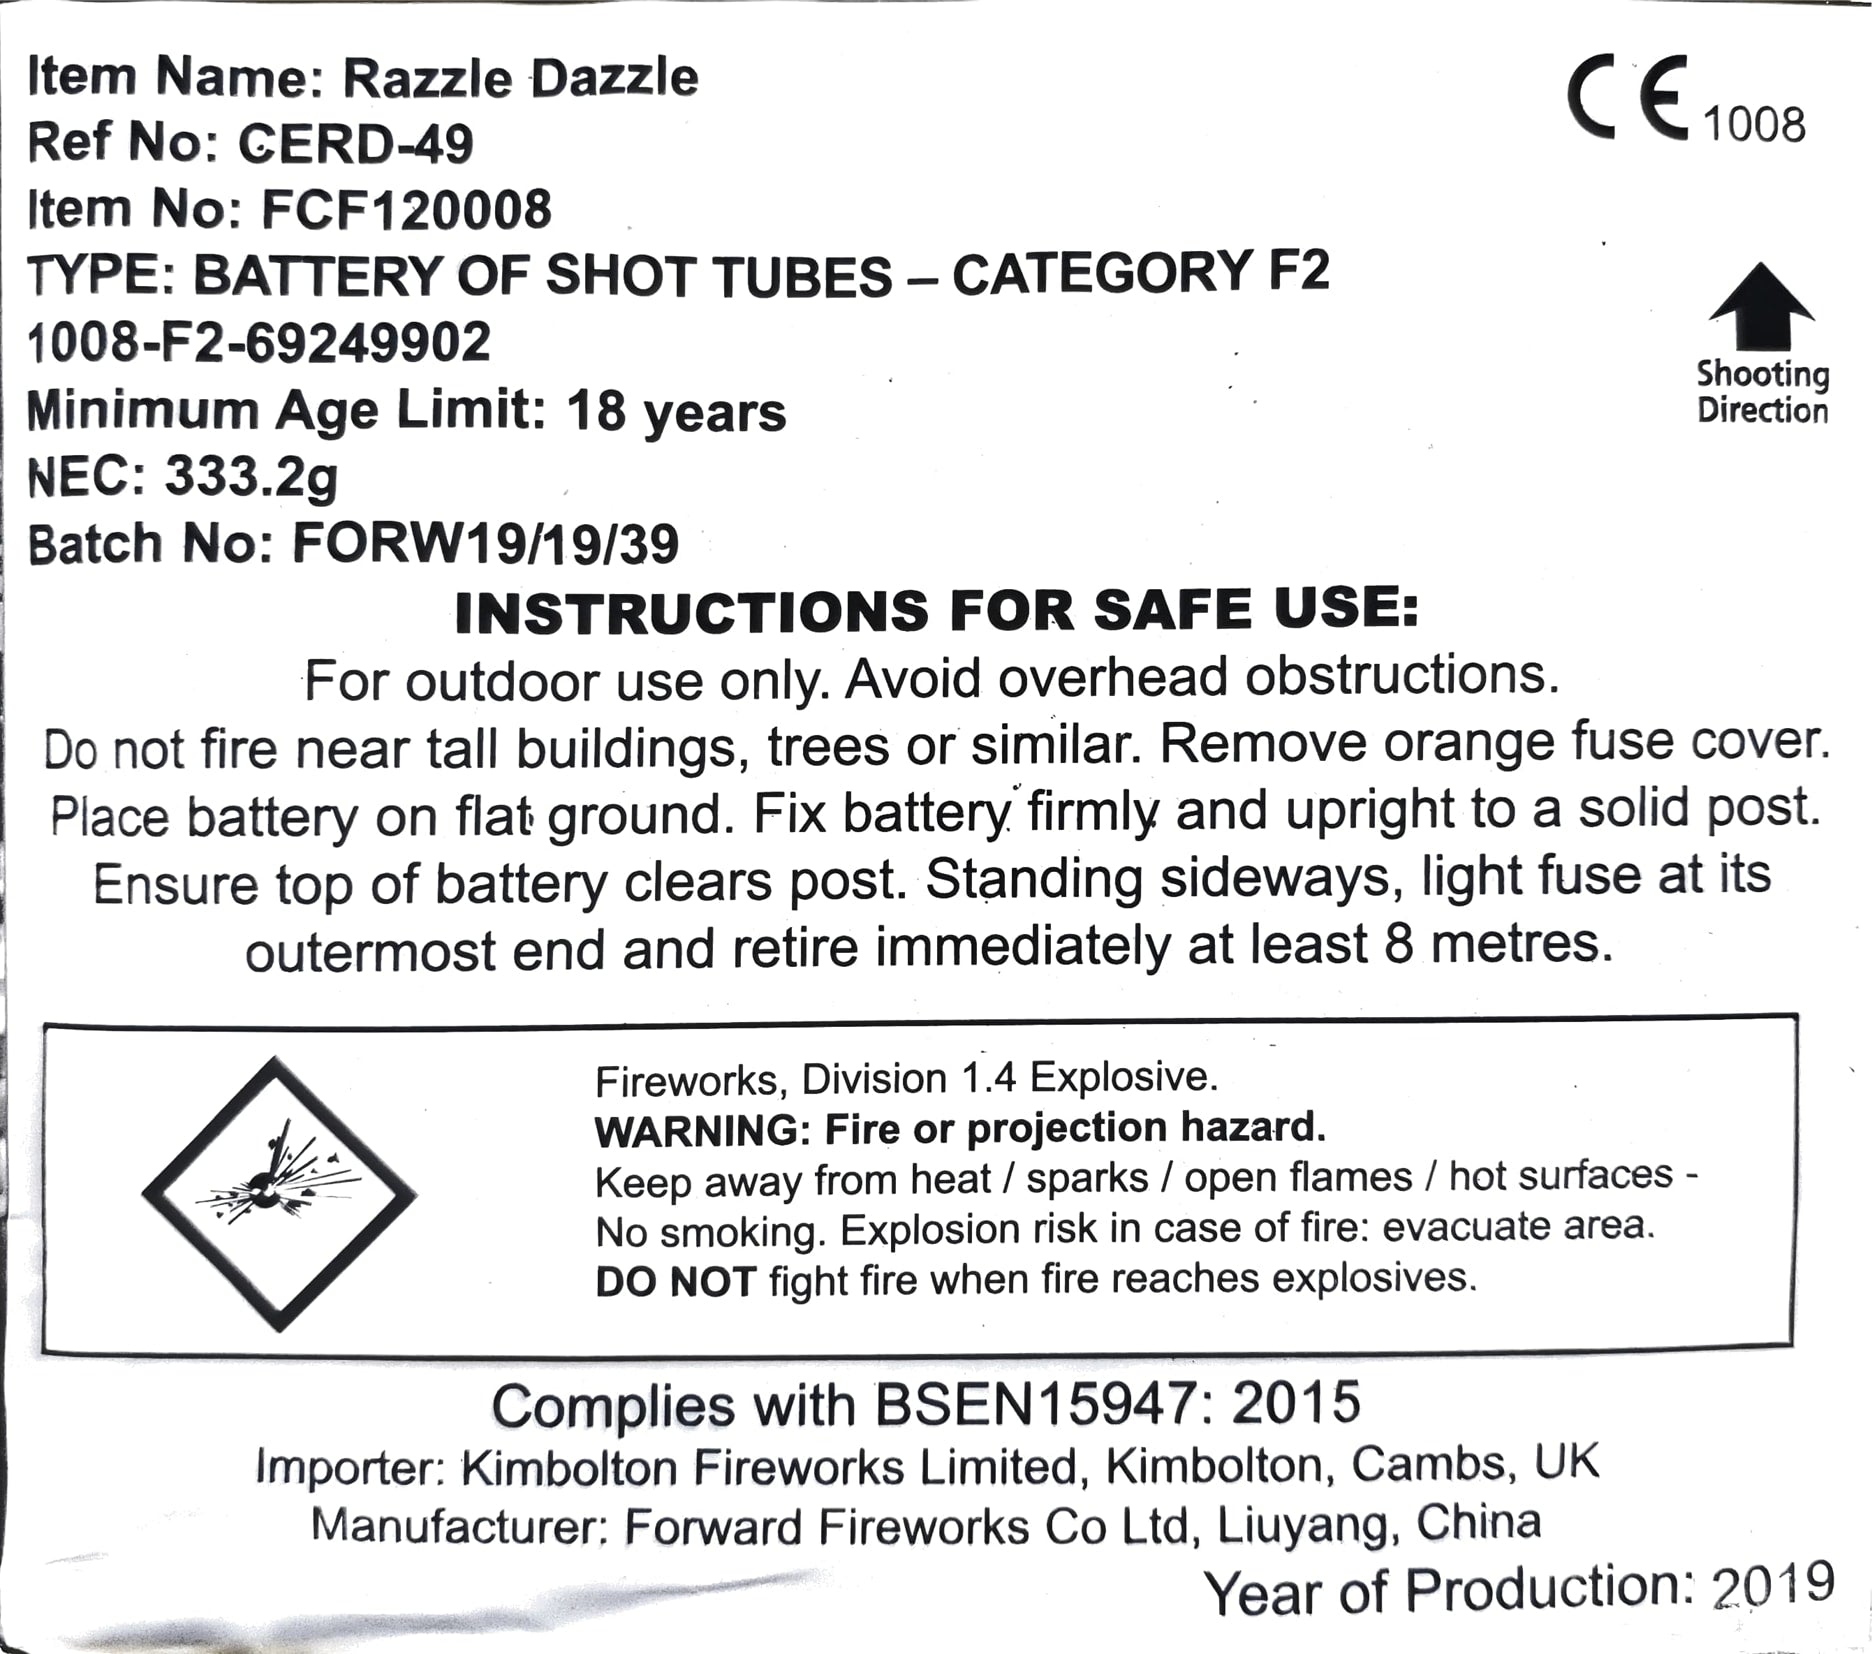 Razzle Dazzle by Kimbolton Fireworks Instructions